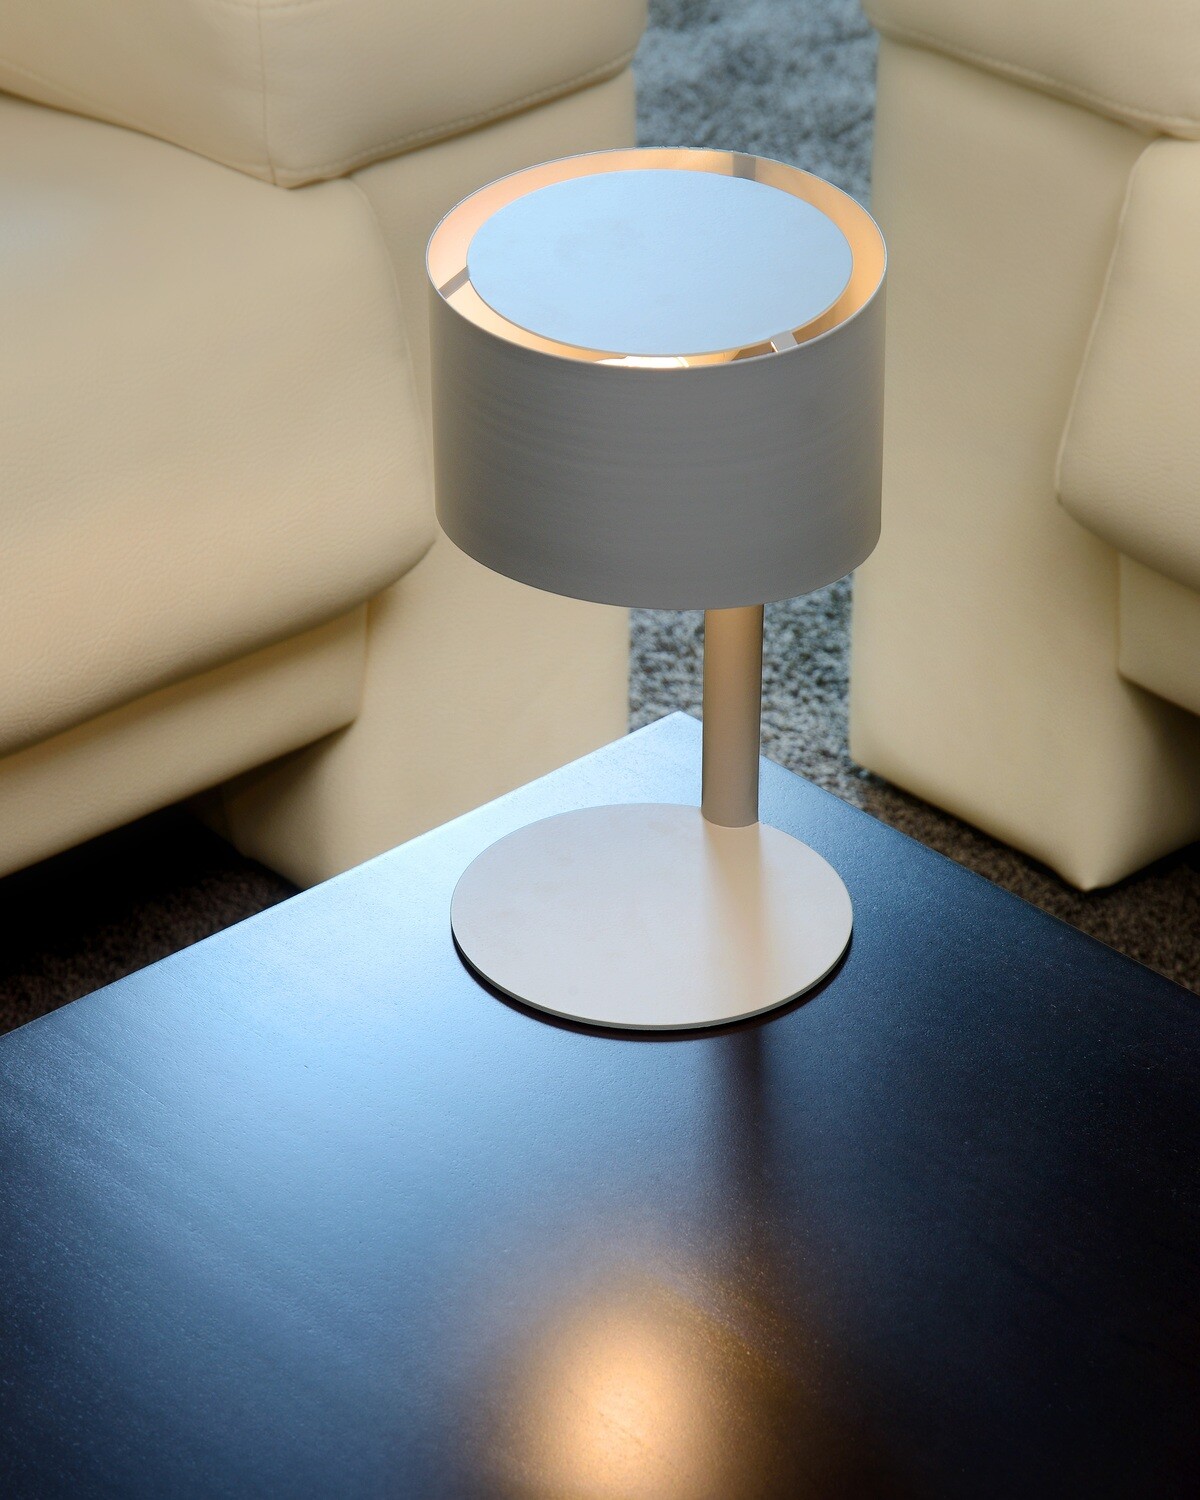 KNULLE Table Lamp E14 H28,5 D15 cm Grey